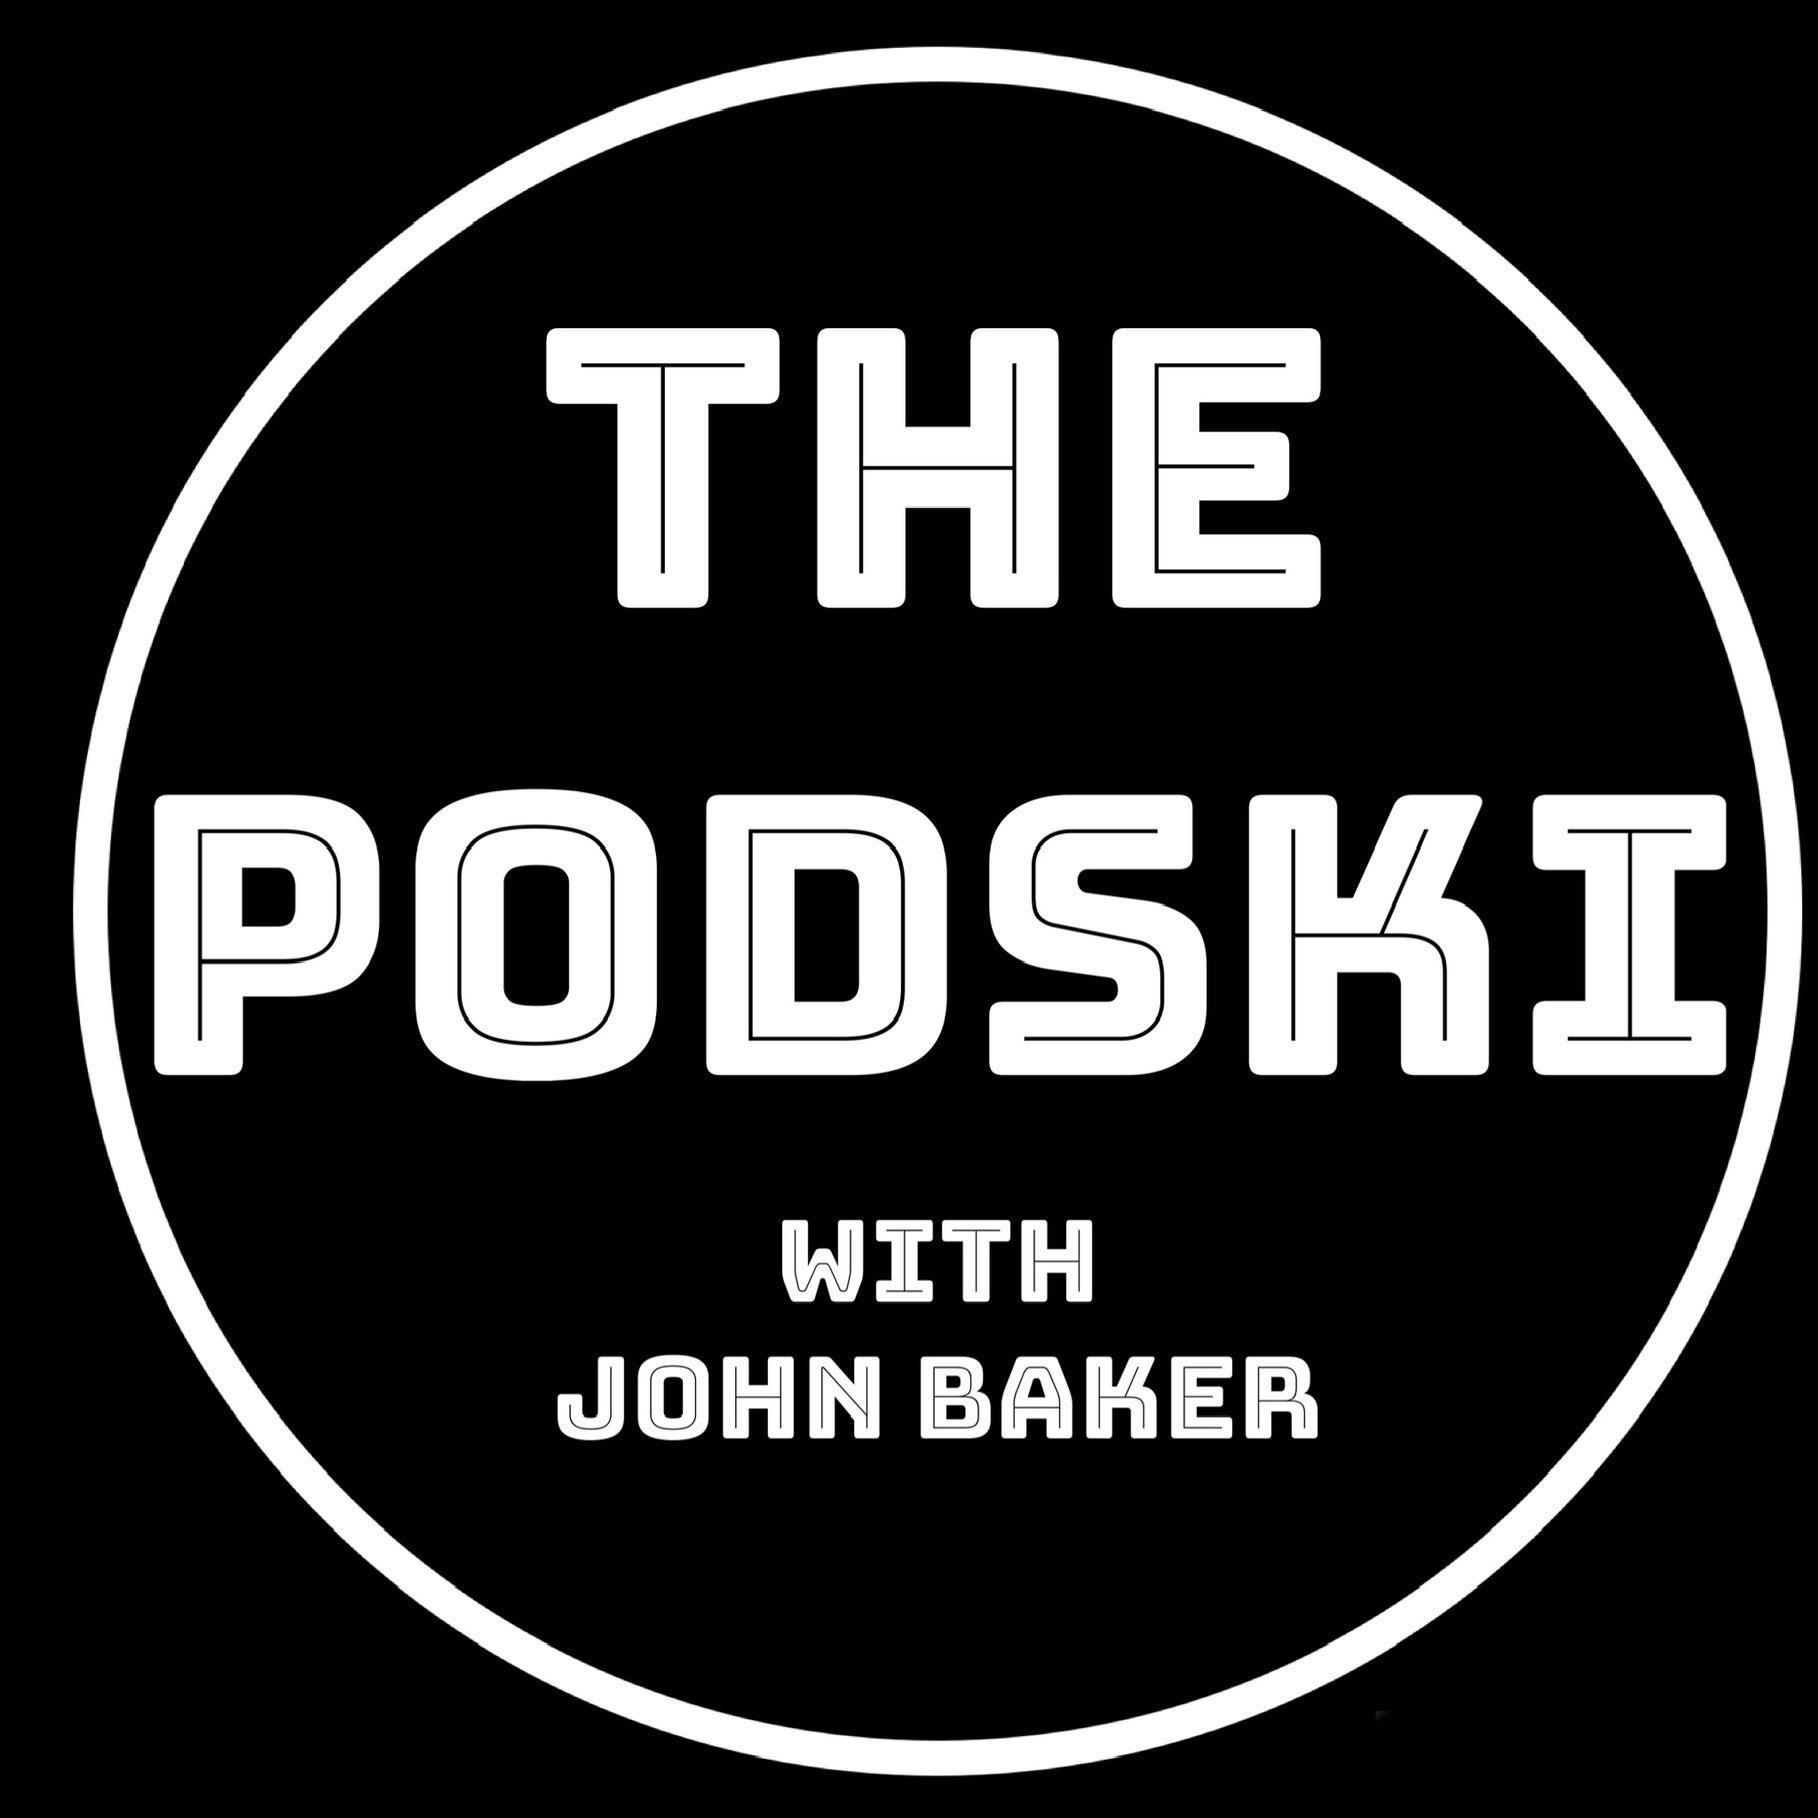 The Podski with John Baker